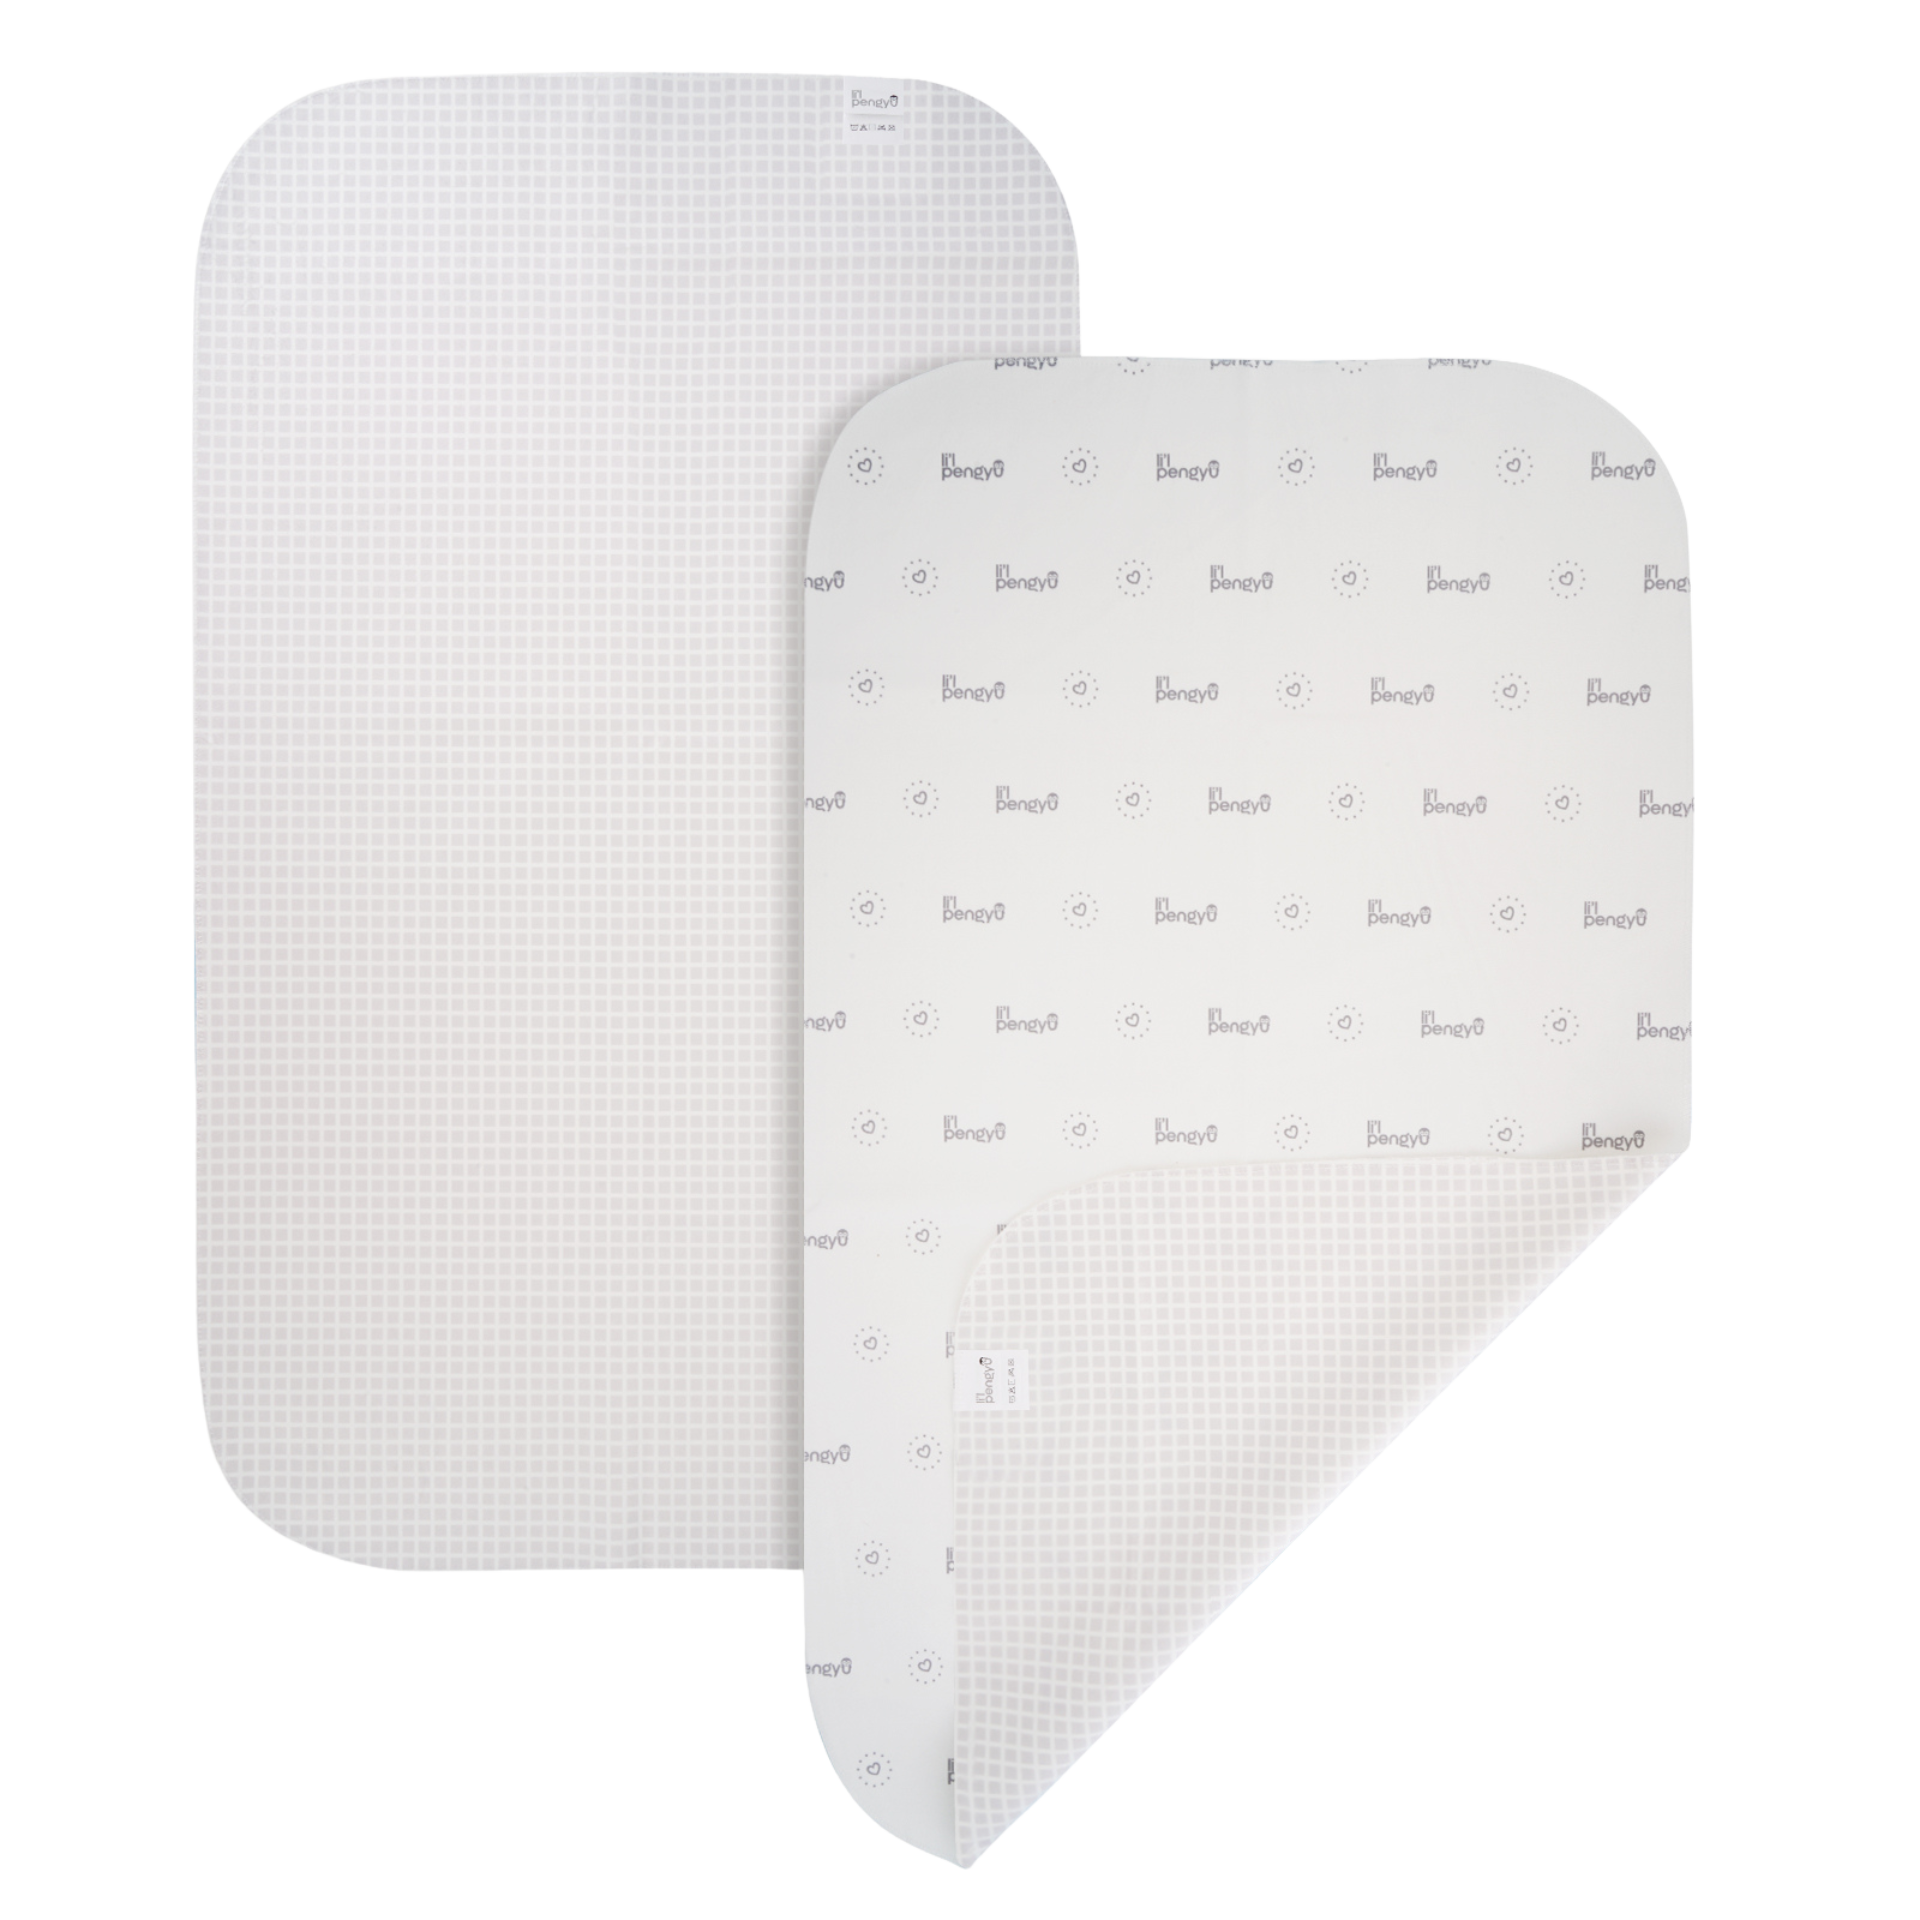 Waterproof Mattress Pad (for Safer Sleep Bassinet) – Li'l Pengyu